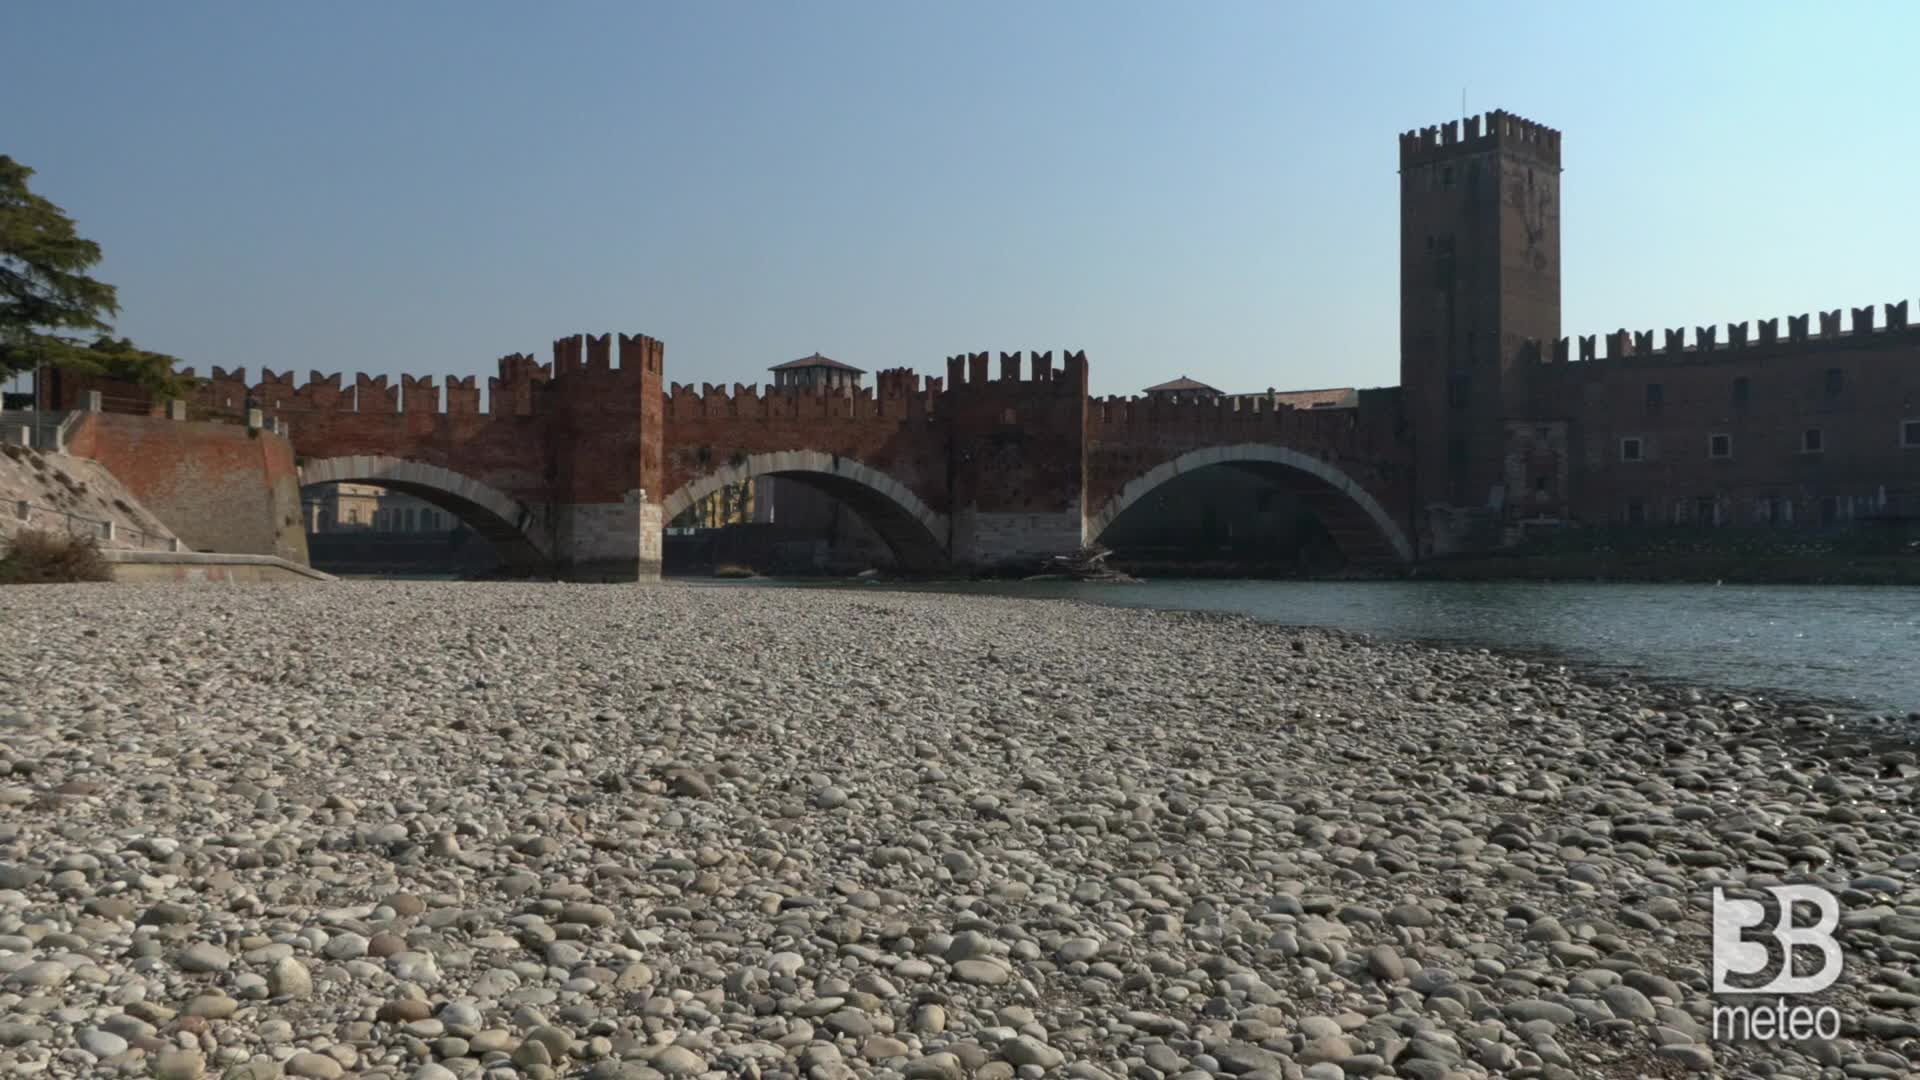 Immagine 1:Cronaca meteo video, siccit&agrave; Nord - Adige in secca a Verona: le immagini a Castelvecchio